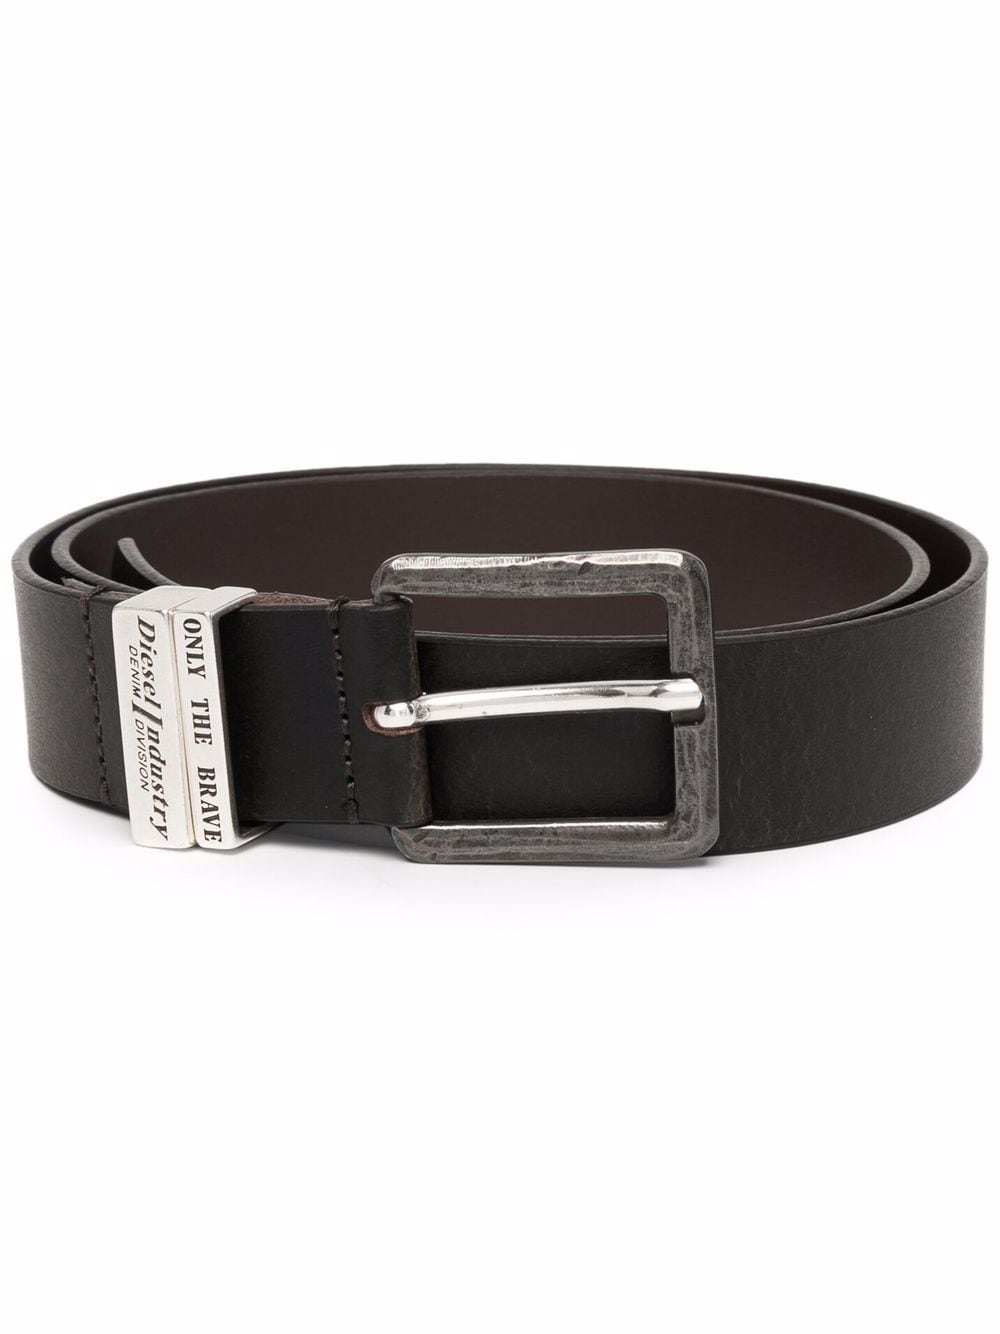 B-Guarantee-A leather belt